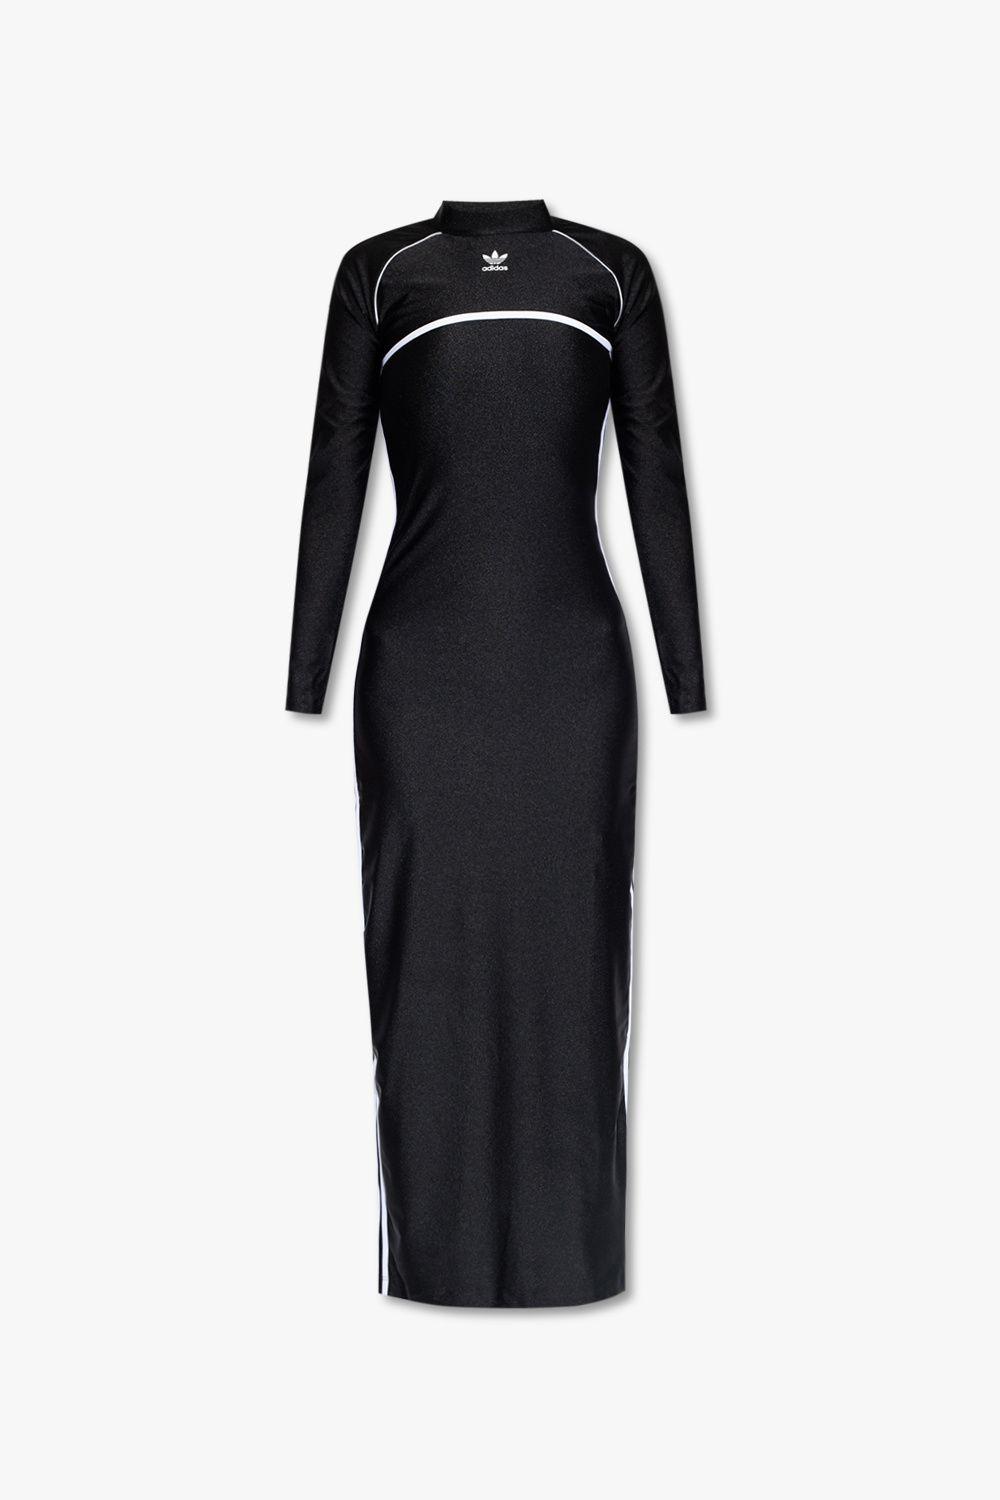 adidas Originals Dress With Logo in Black | Lyst